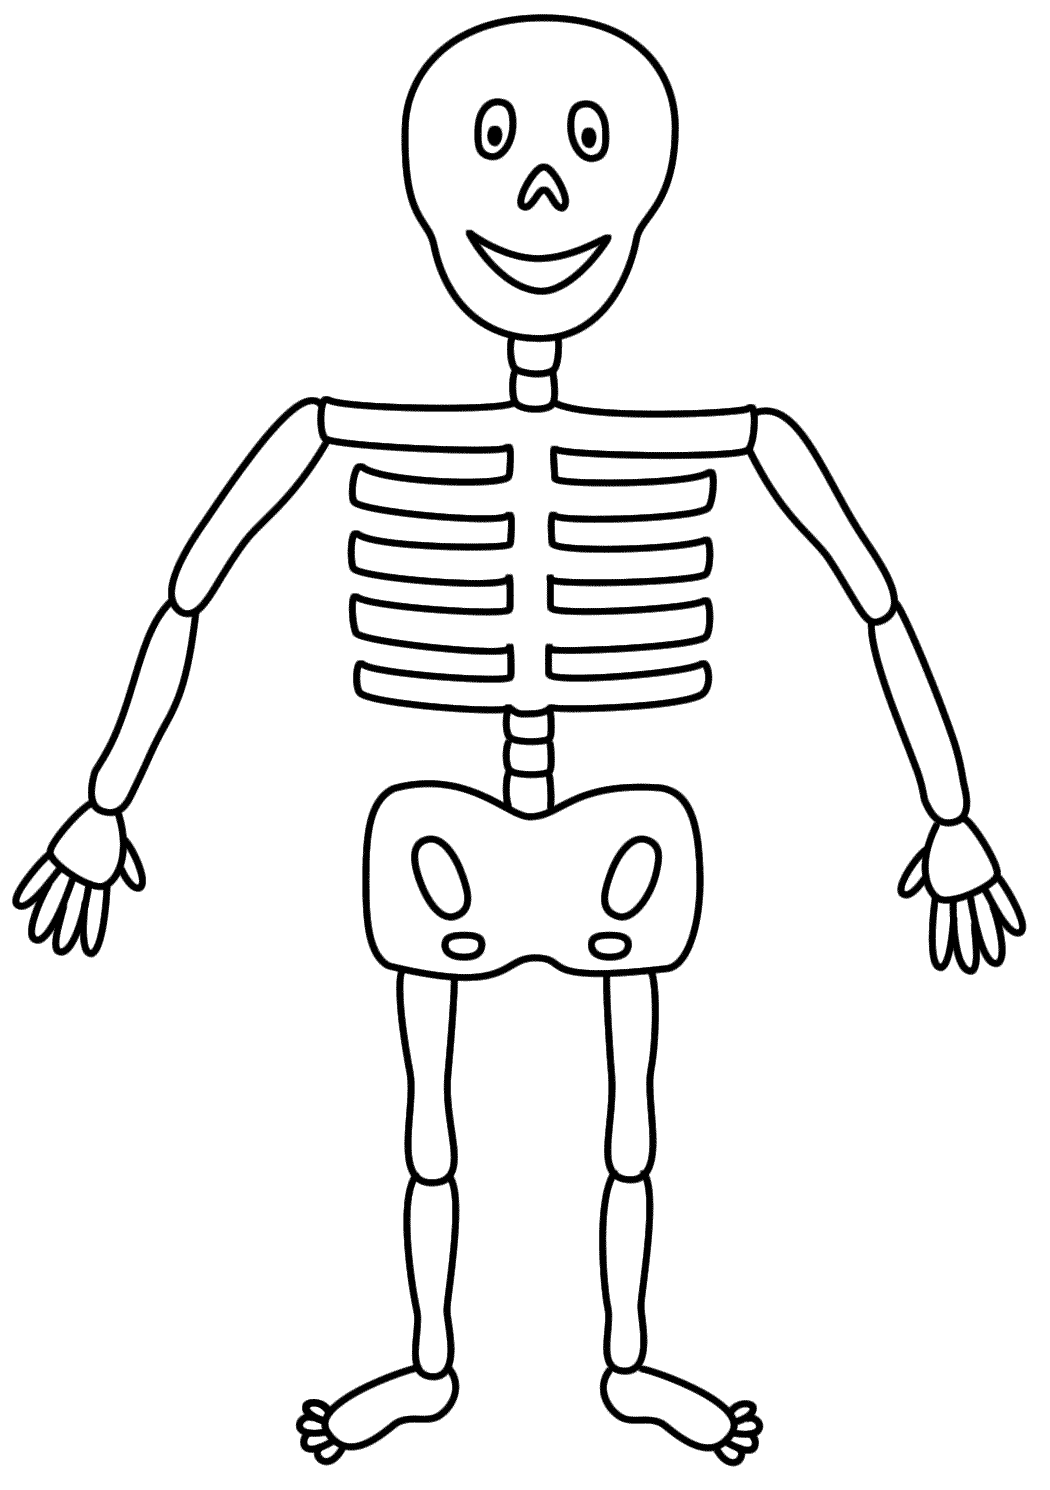 Smiling Skeleton from Skeleton